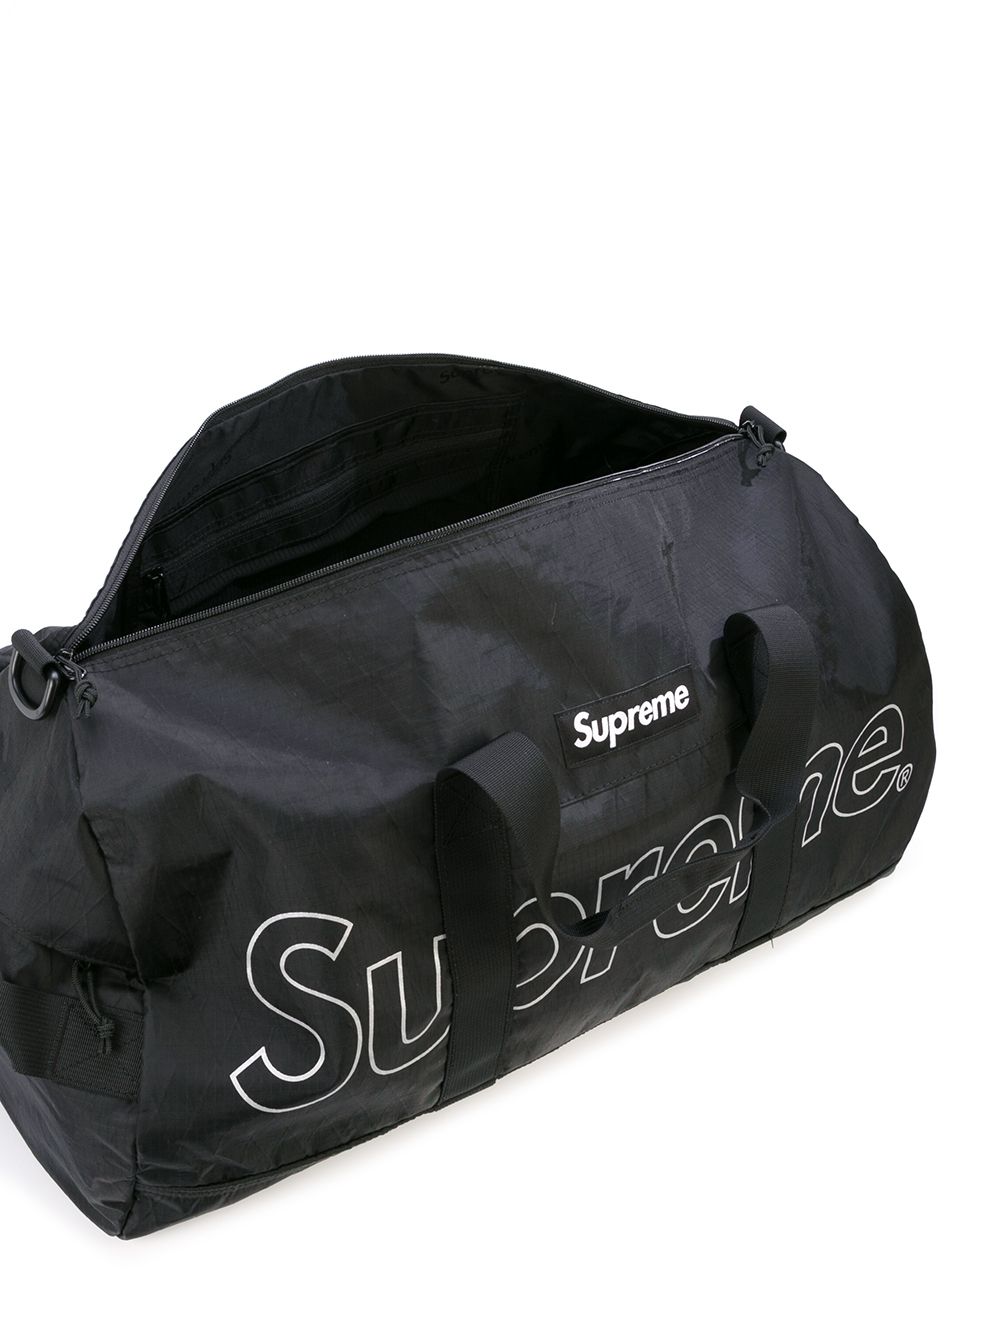 supreme duffle bag fw18